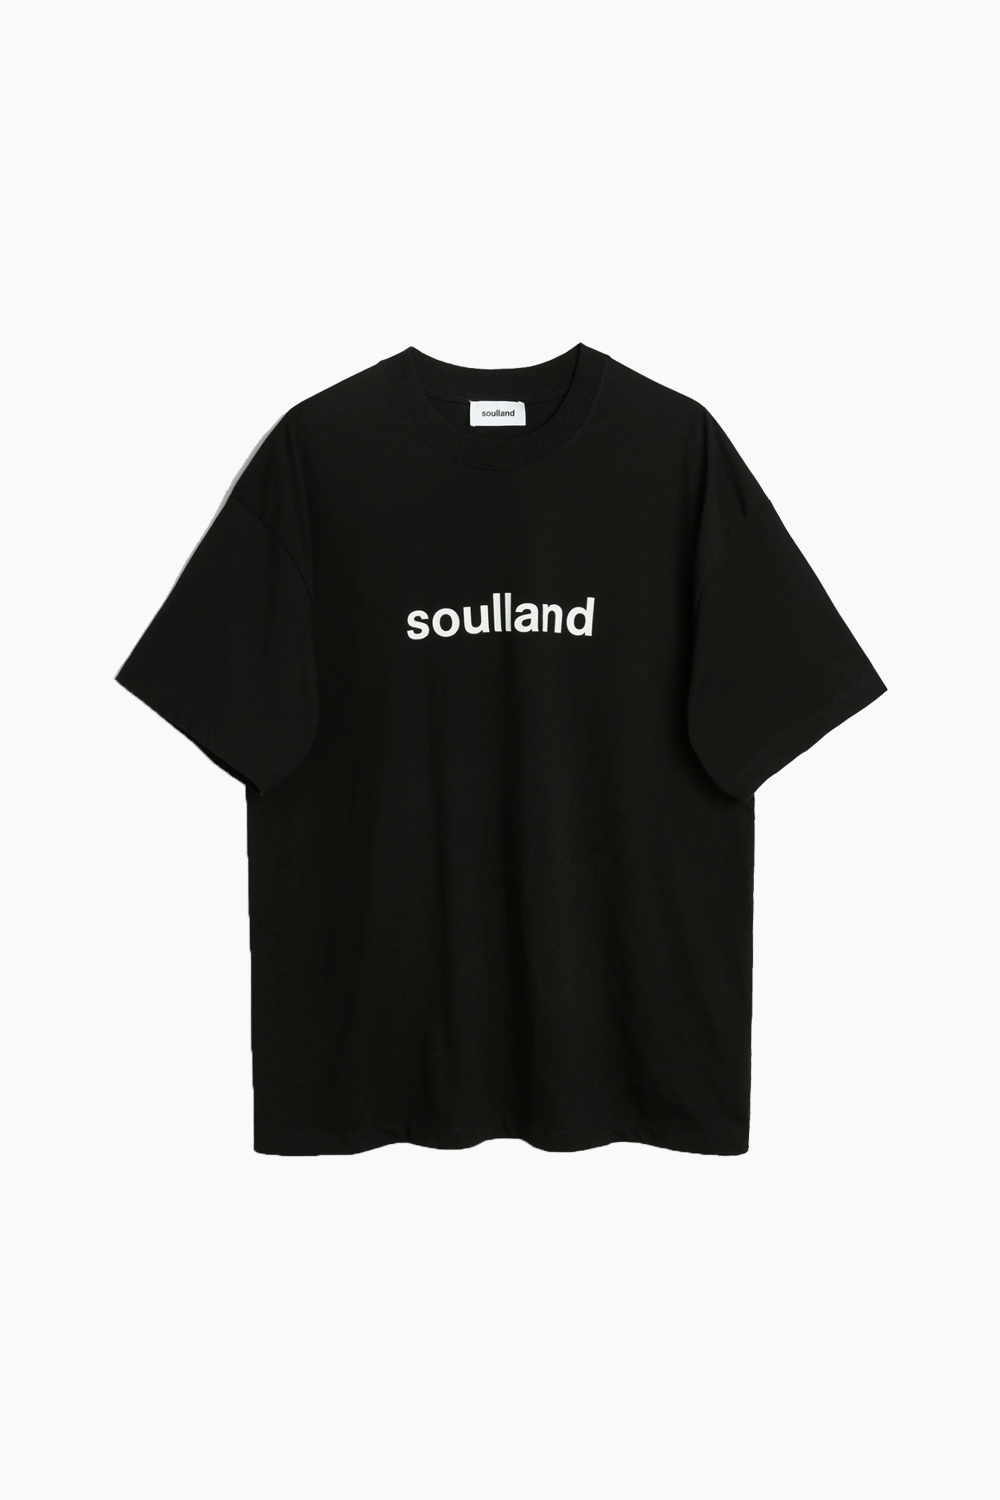 Se Ocean T-shirt - Black - Soulland - Sort XS/S hos QNTS.dk